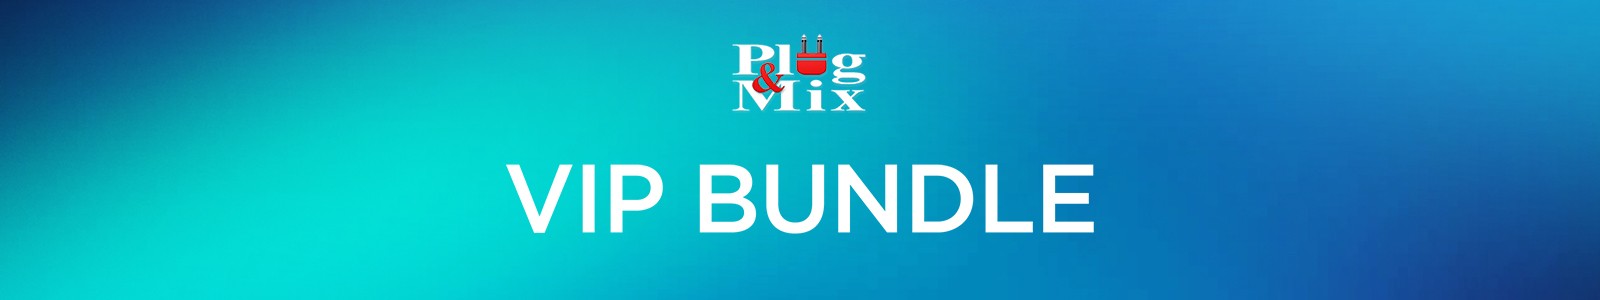 VIP Bundle by Plug & Mix